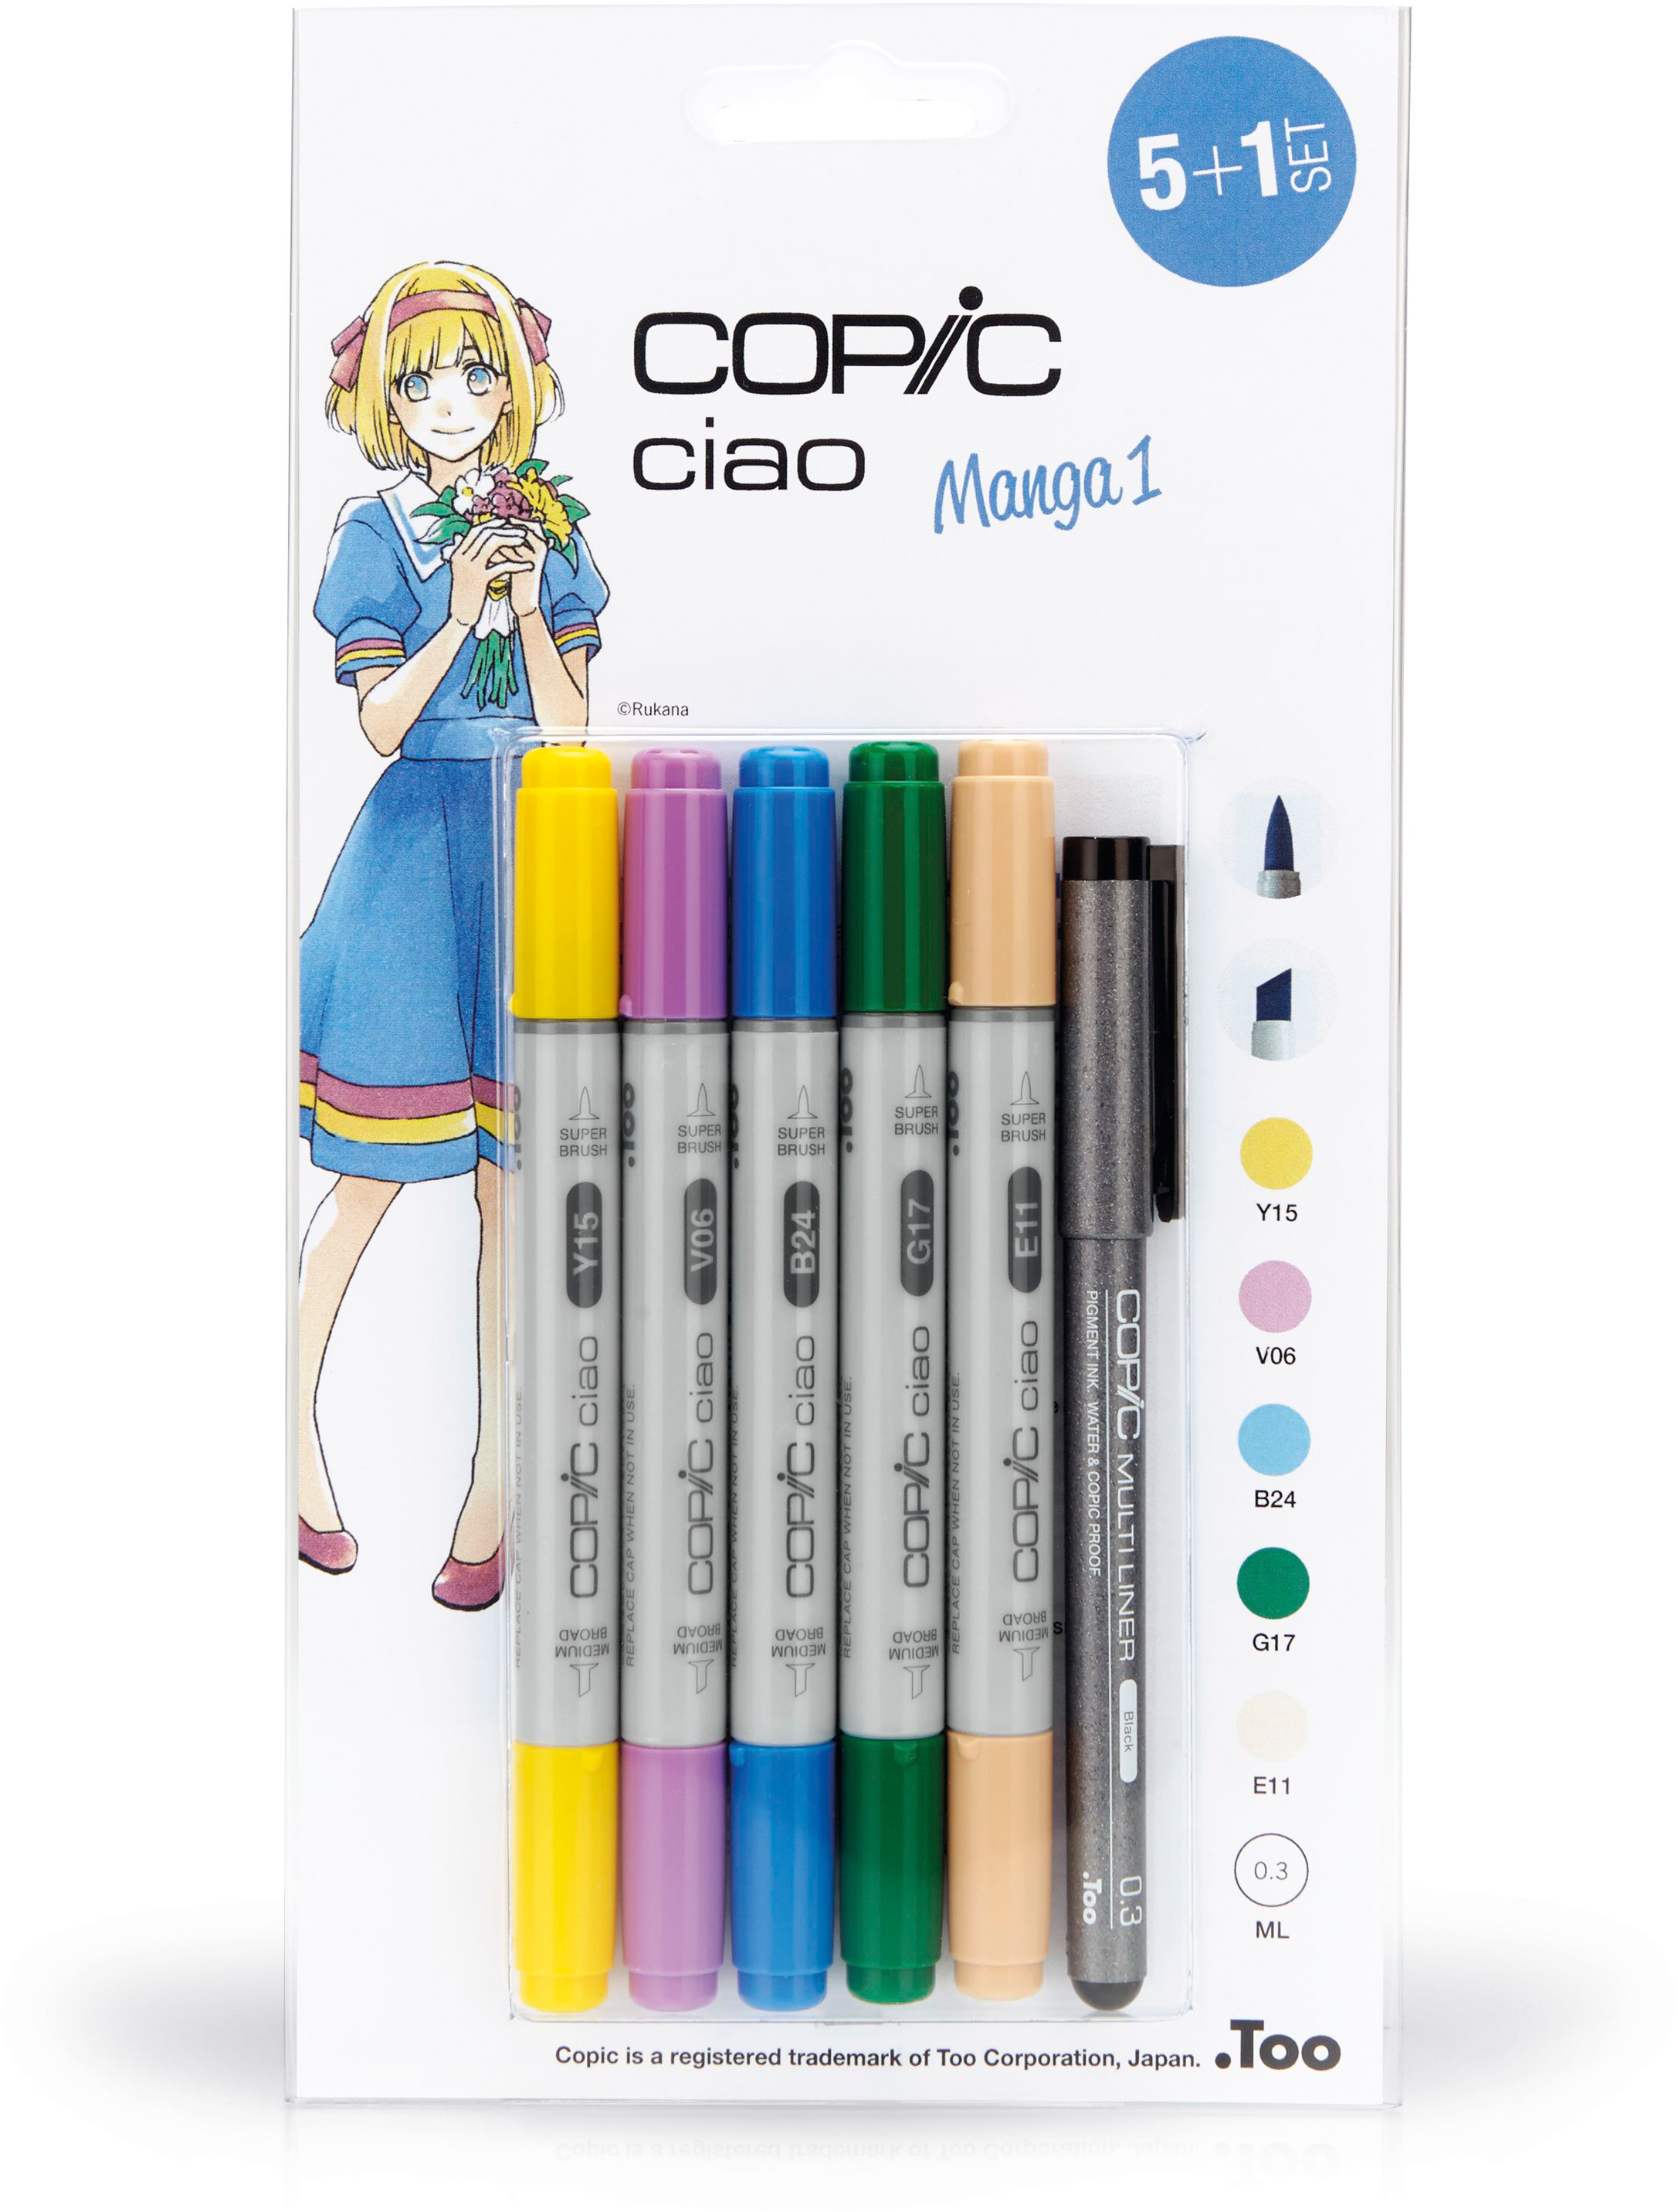 COPIC Marker Ciao 22075556 5+1 Set Manga 1